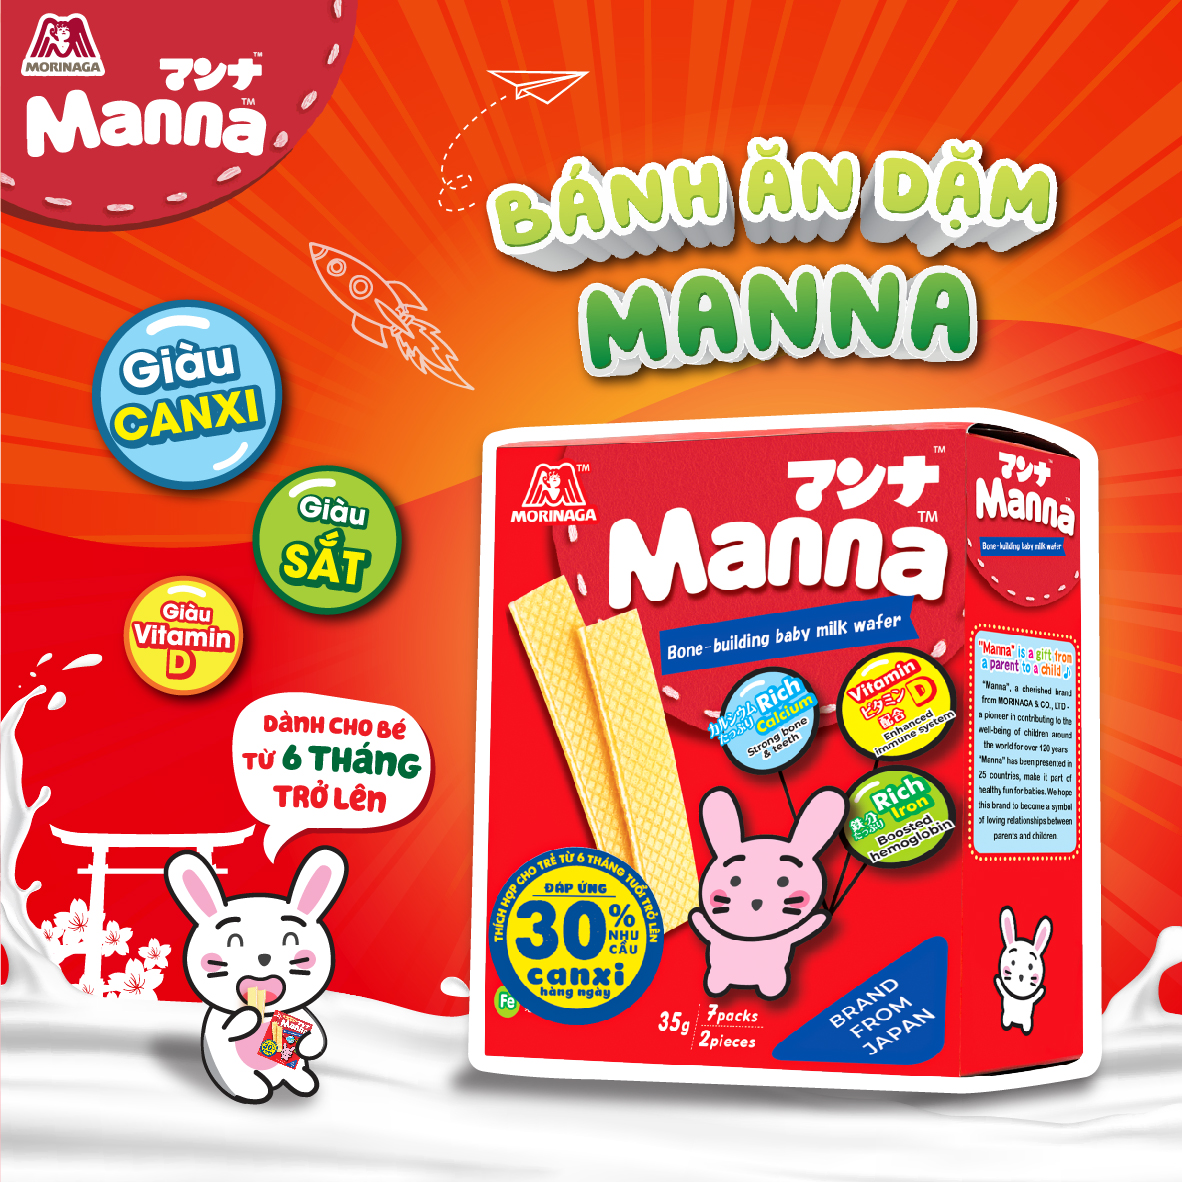 Bánh Xốp Sữa Morinaga Manna - Manna Milk Wafer 35g